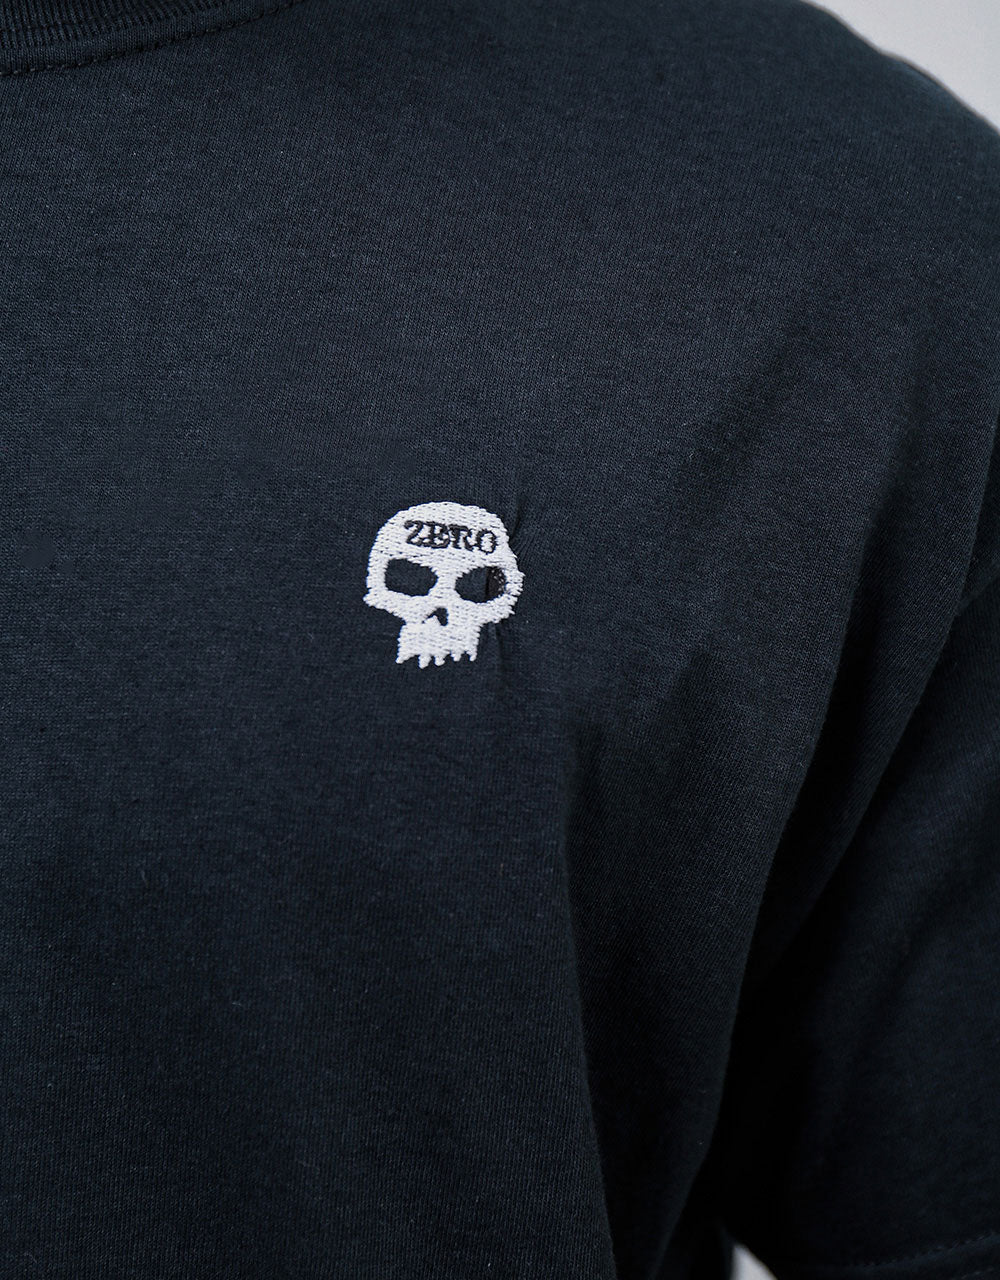 Zero Single Skull Embroidery T-Shirt - Black/White